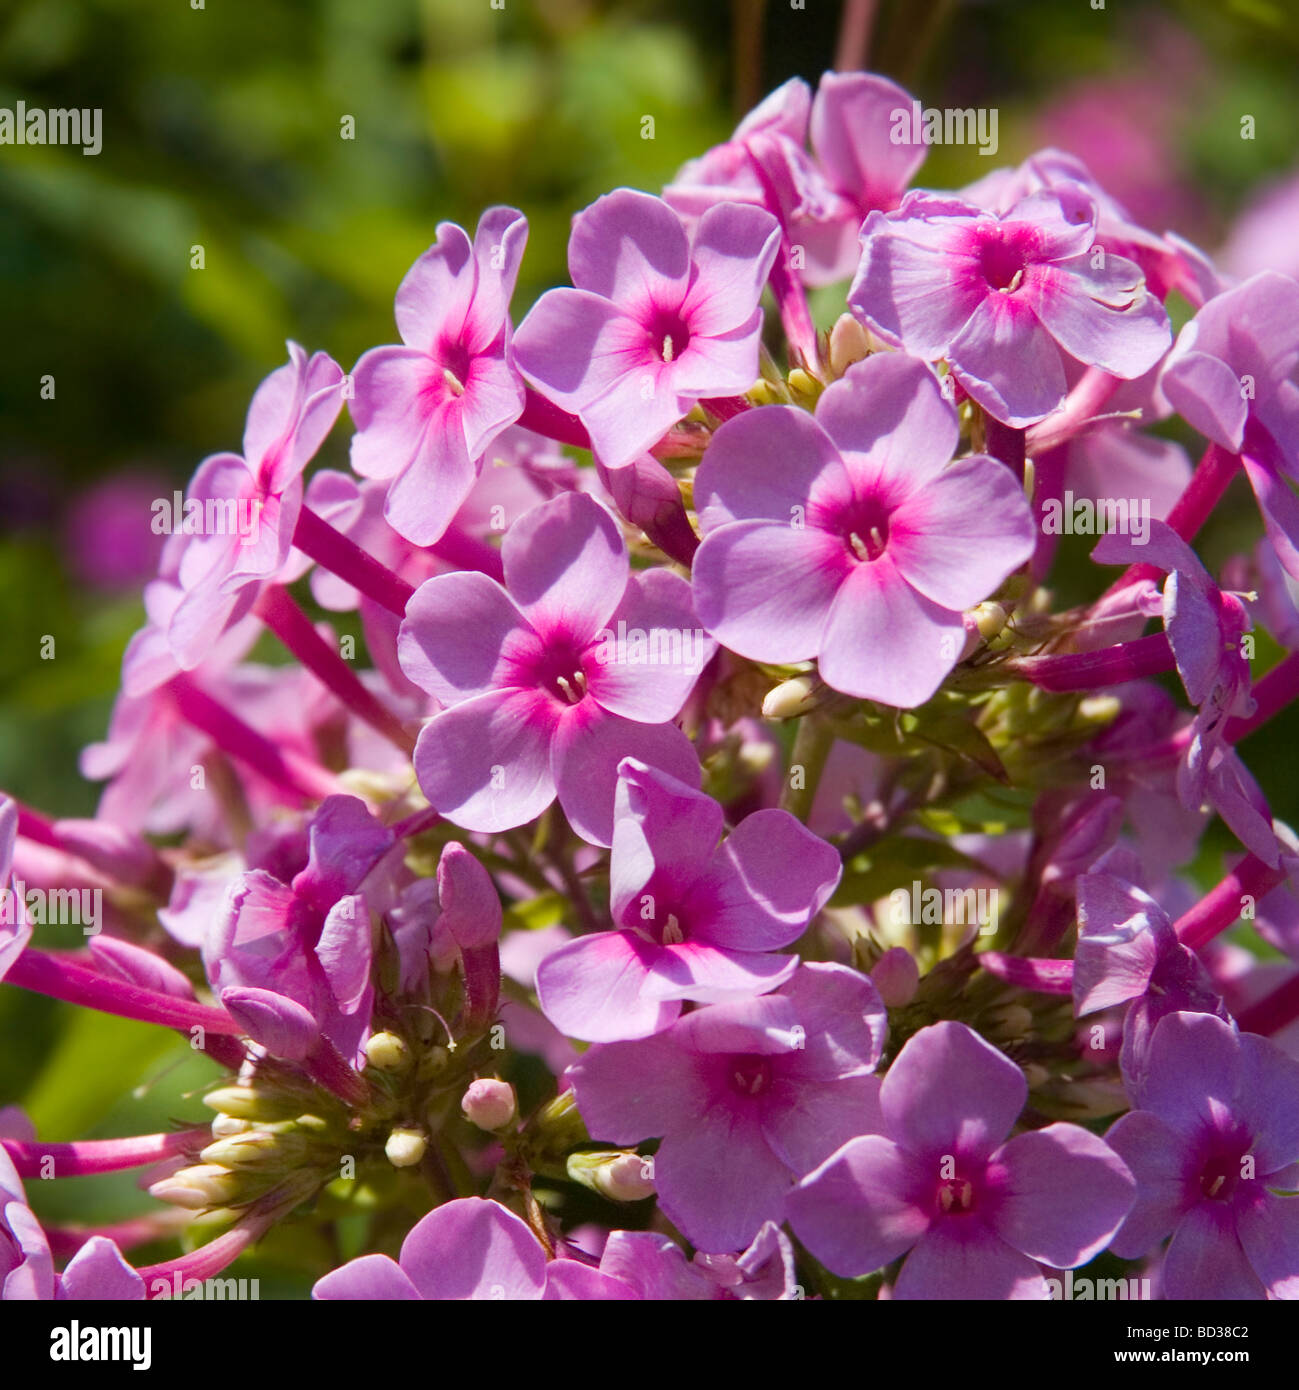 beautiful vibrant pink phlox flower cluster Stock Photo